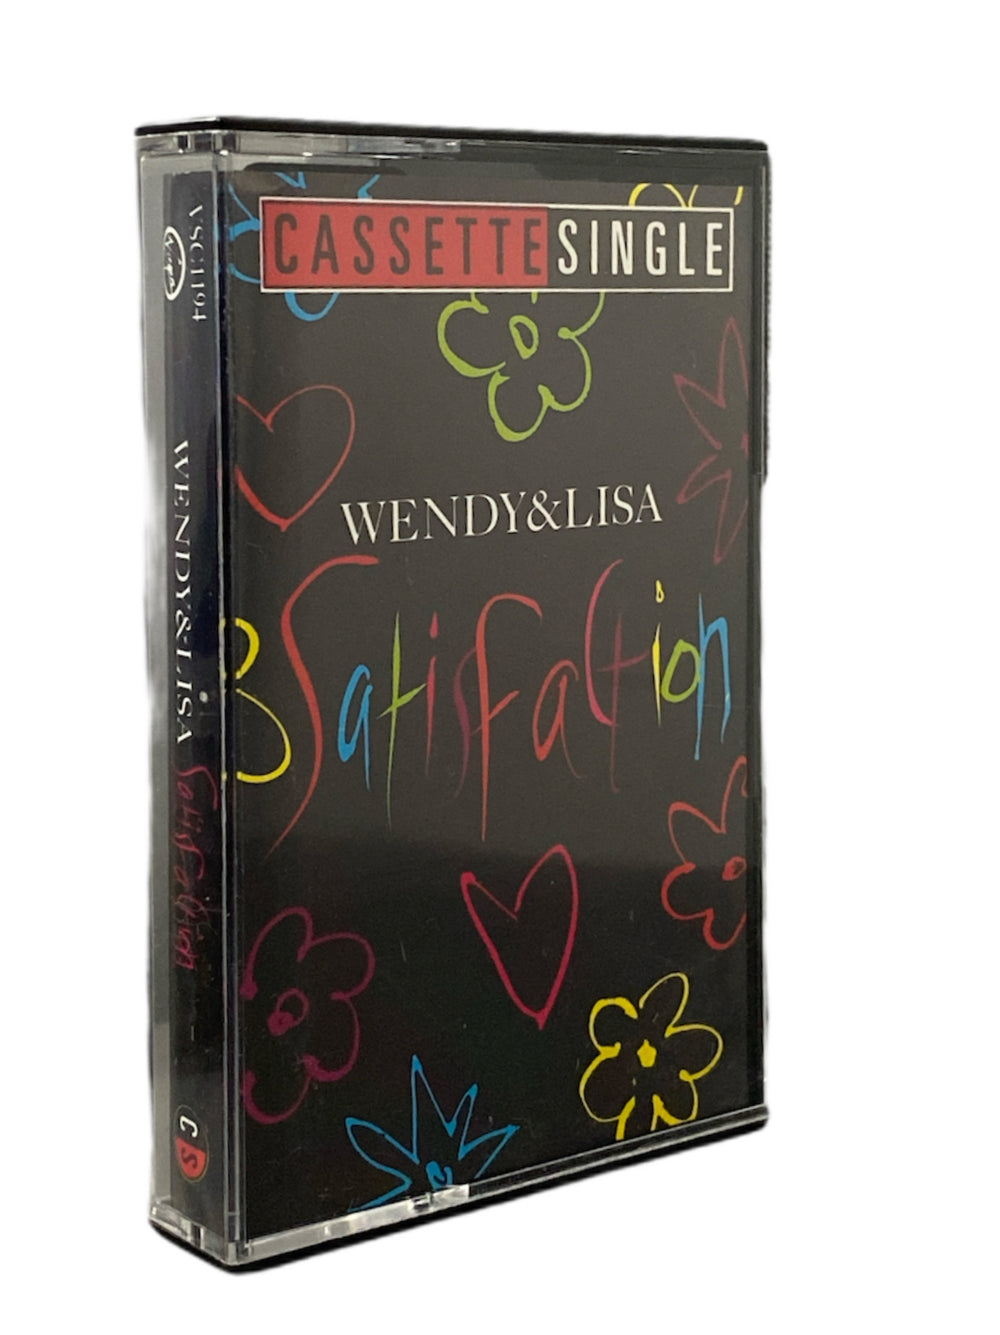 Wendy & Lisa Satisfaction Tape Cassette Single 1989 UK Release Prince